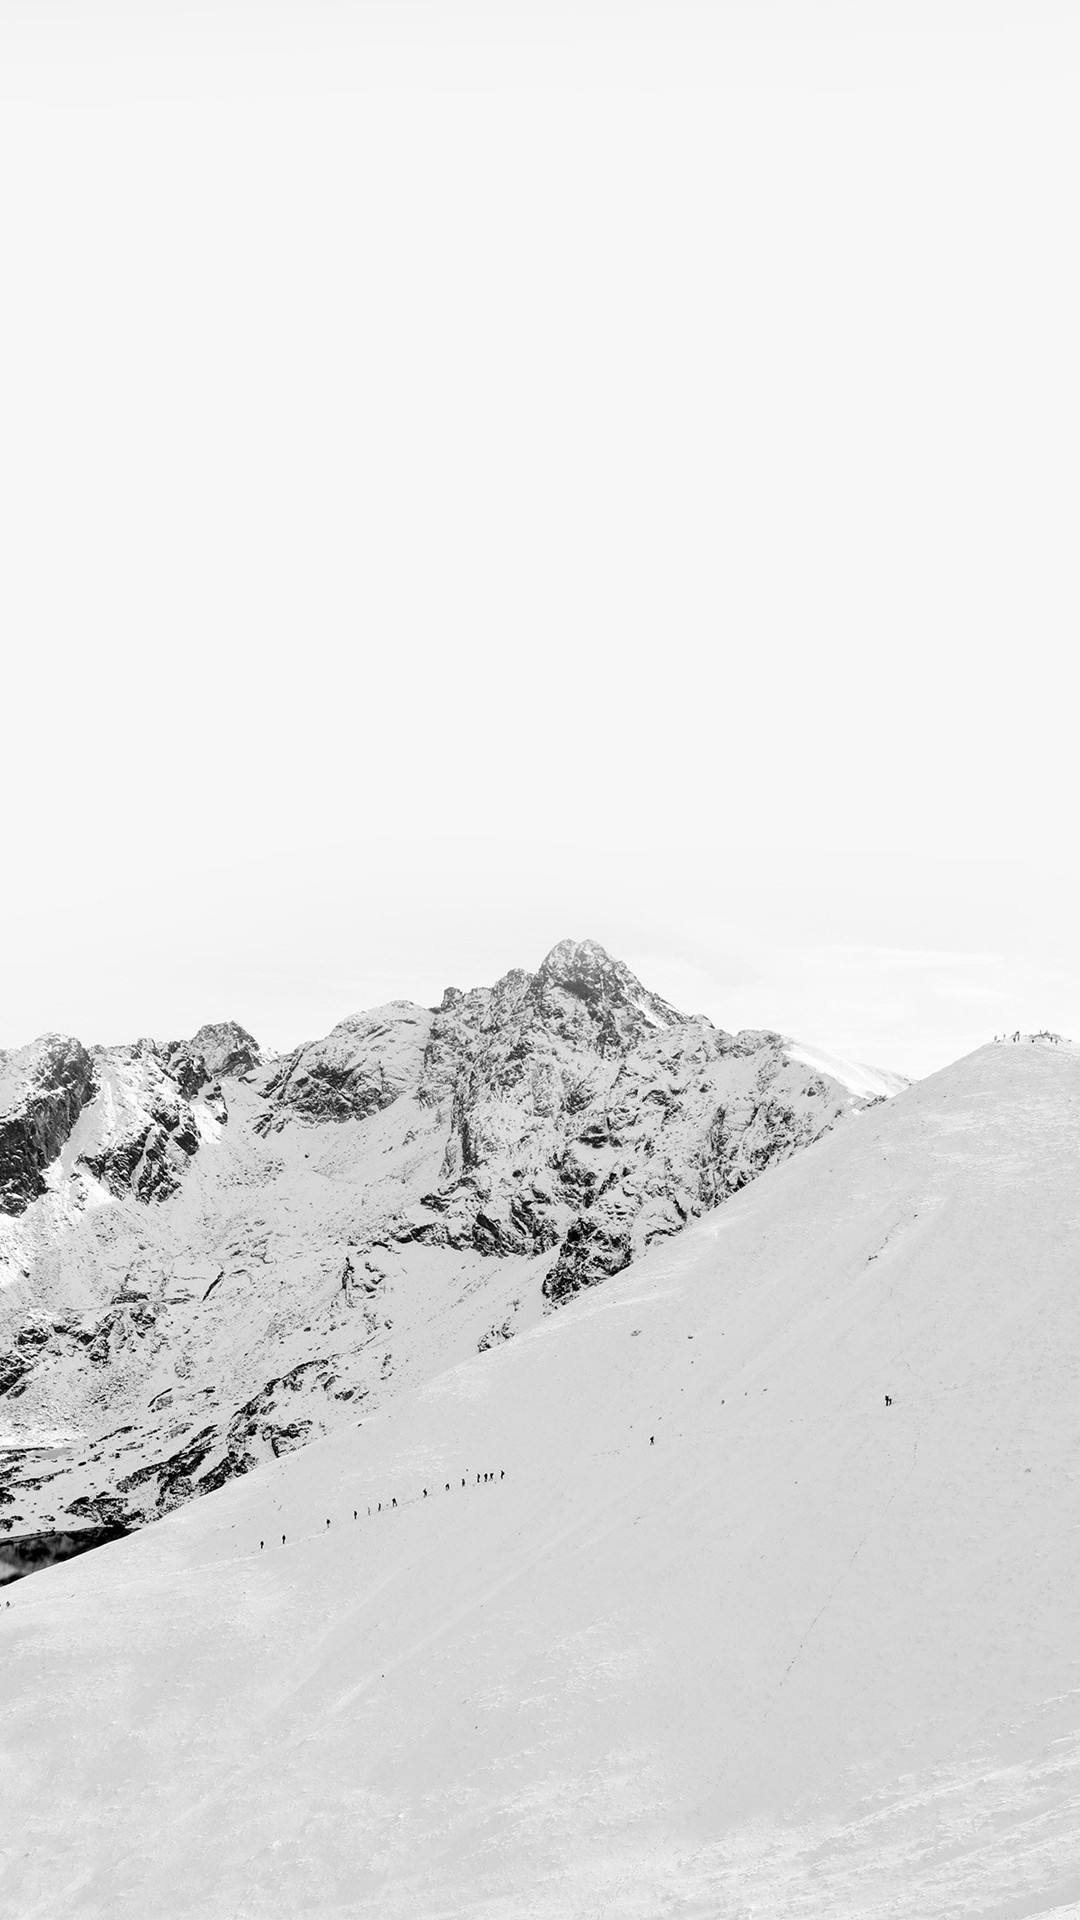 1080x1920 Winter Mountain Snow Nature White #iPhone #6 #plus #wallpaper